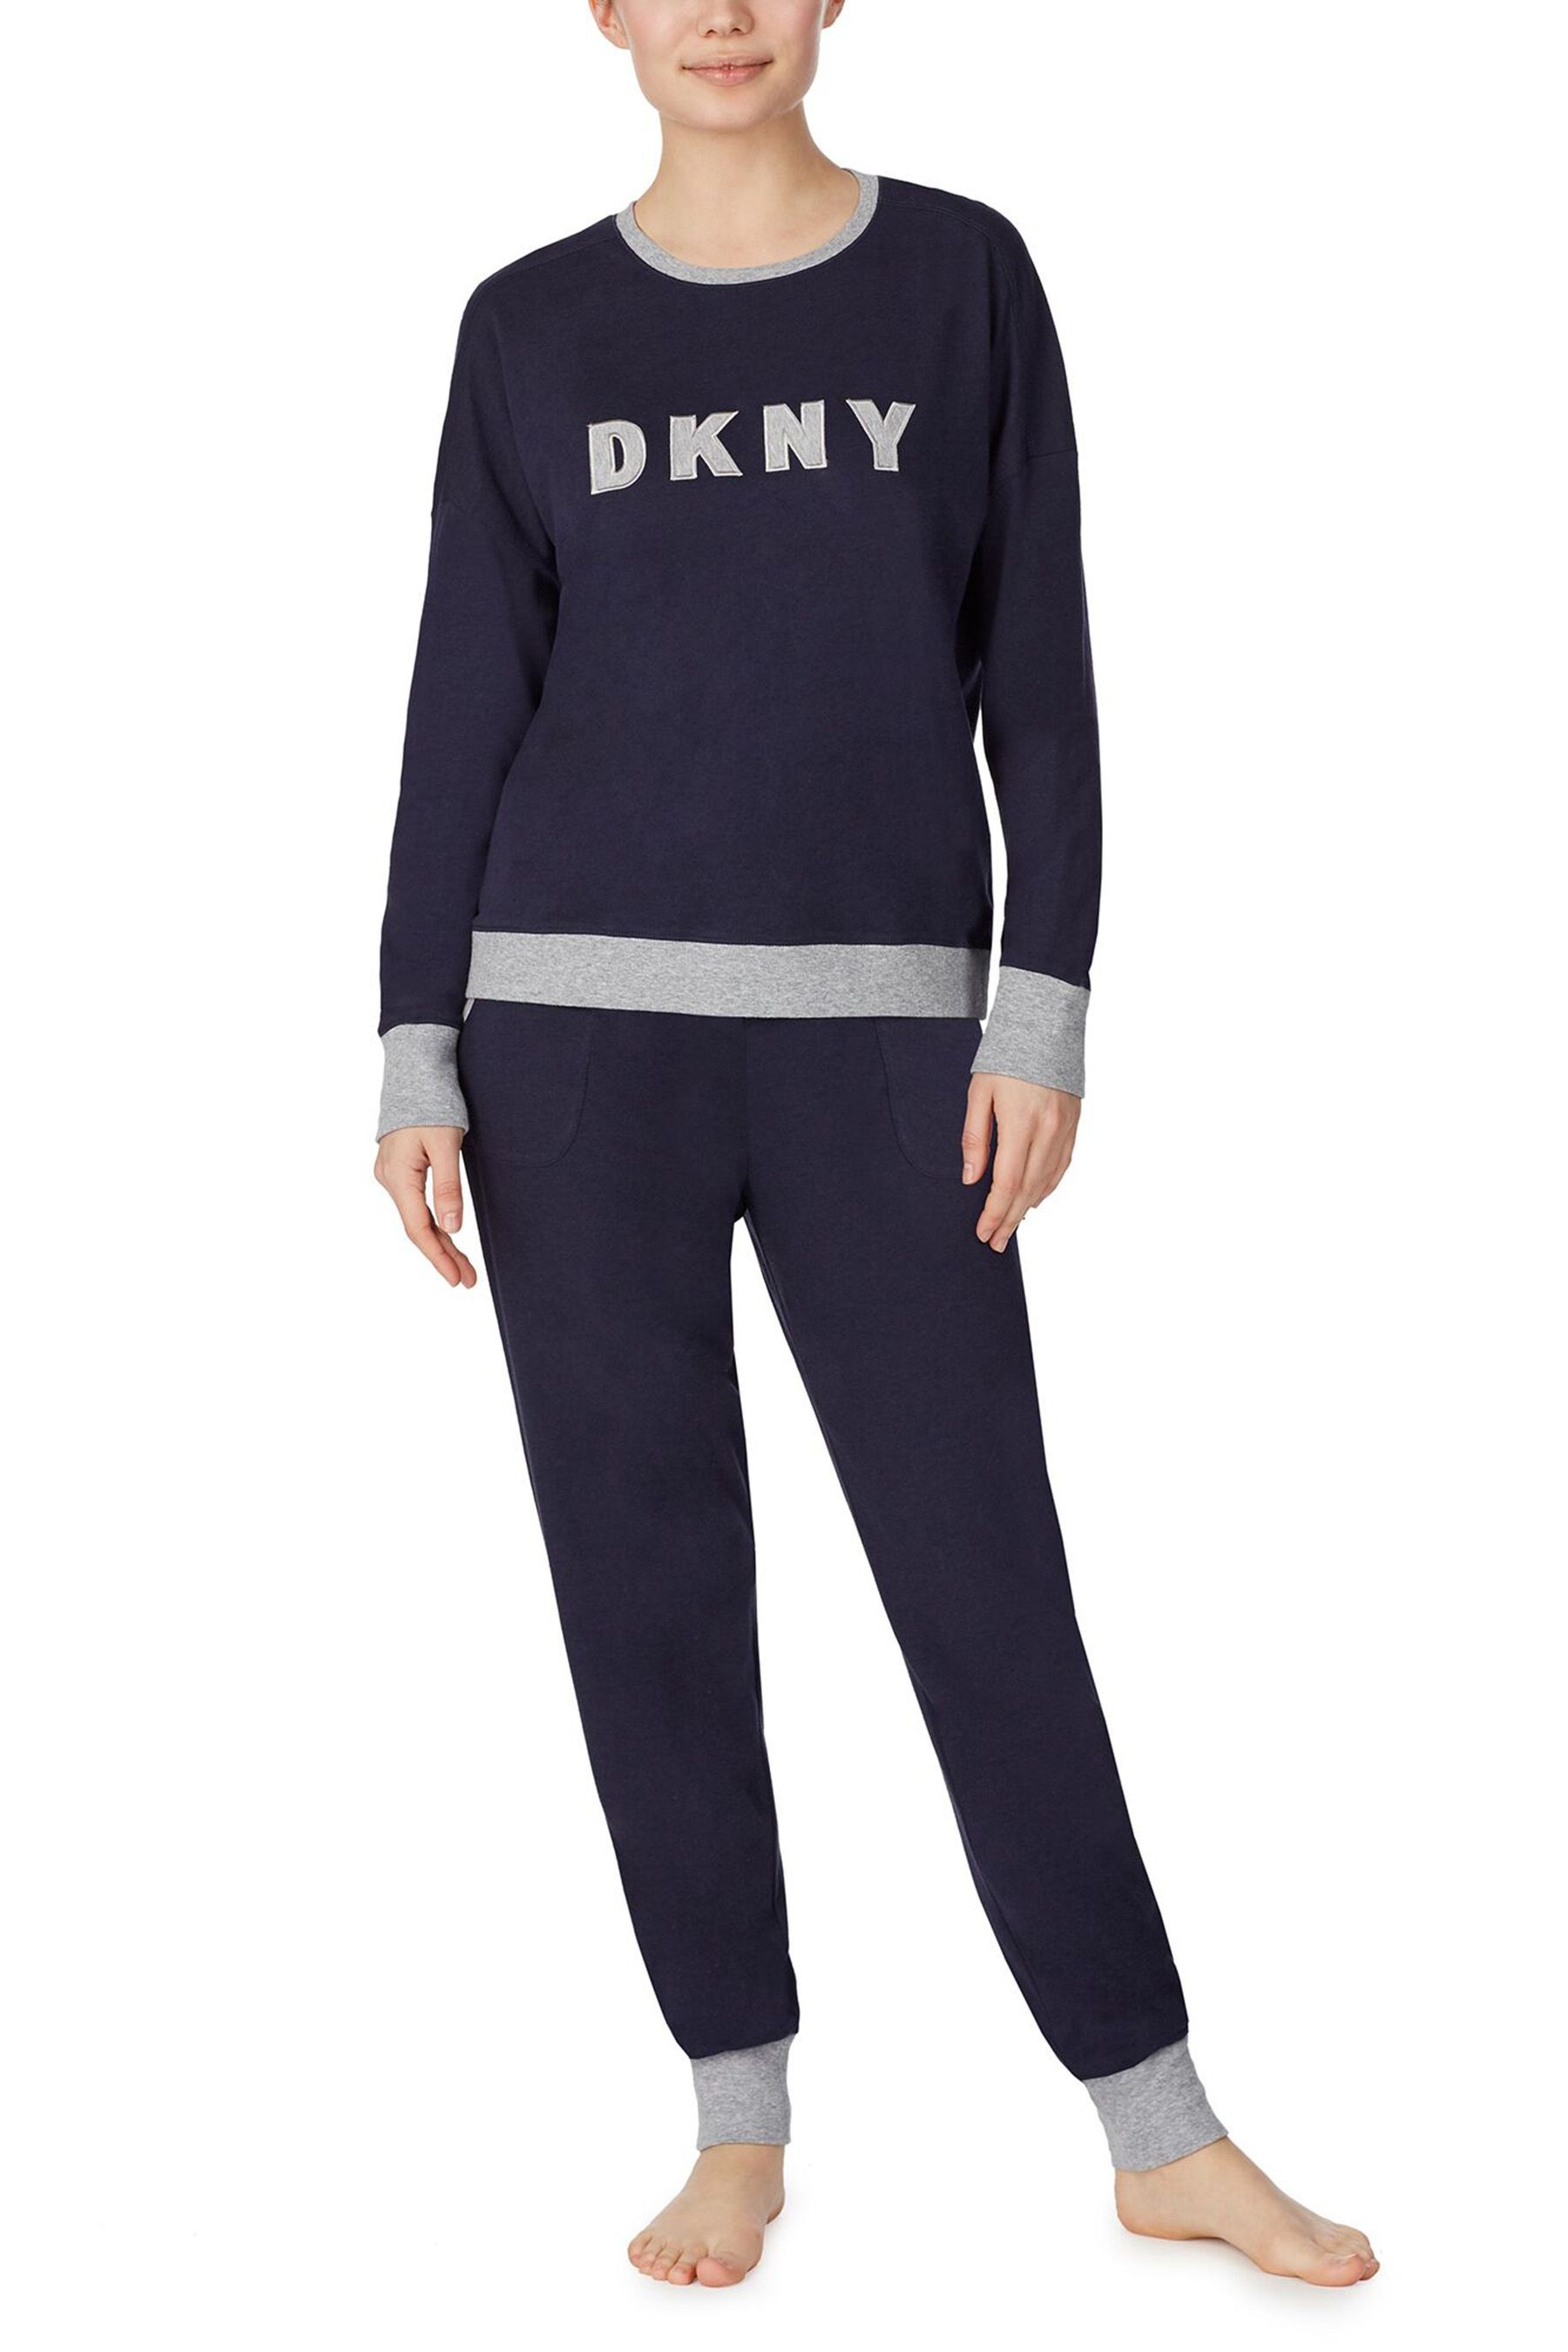 DKNY Signature Top And Joggers Pyjama Set